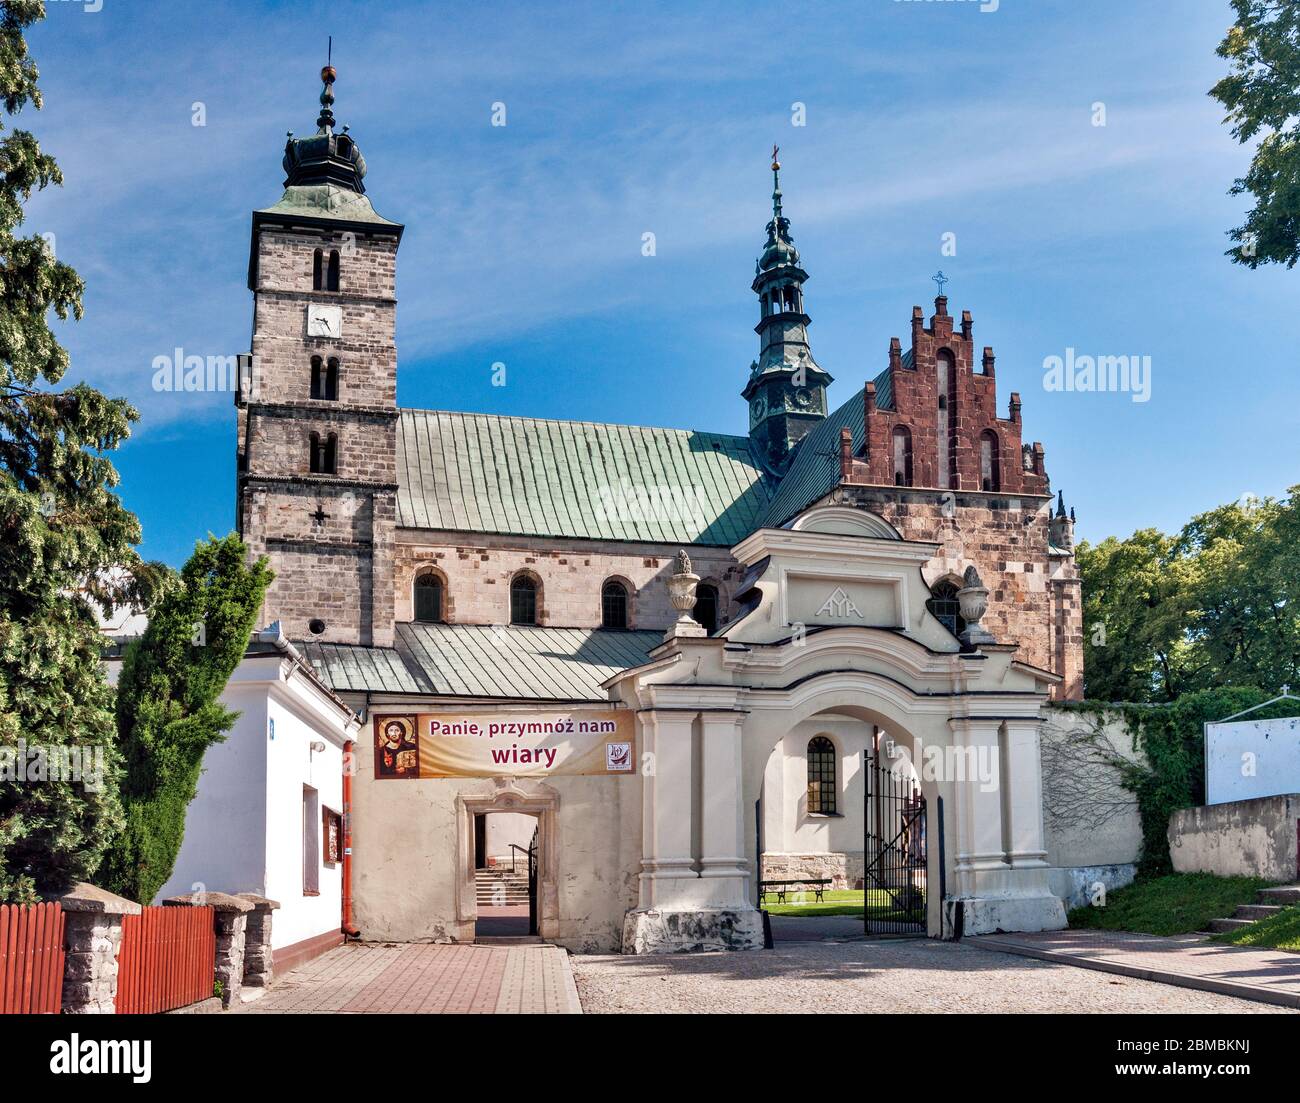 Collegiate Church of Saint Martin, 12th century, Romanesque style, in Opatow, Malopolska aka Lesser Poland region, Poland Stock Photo